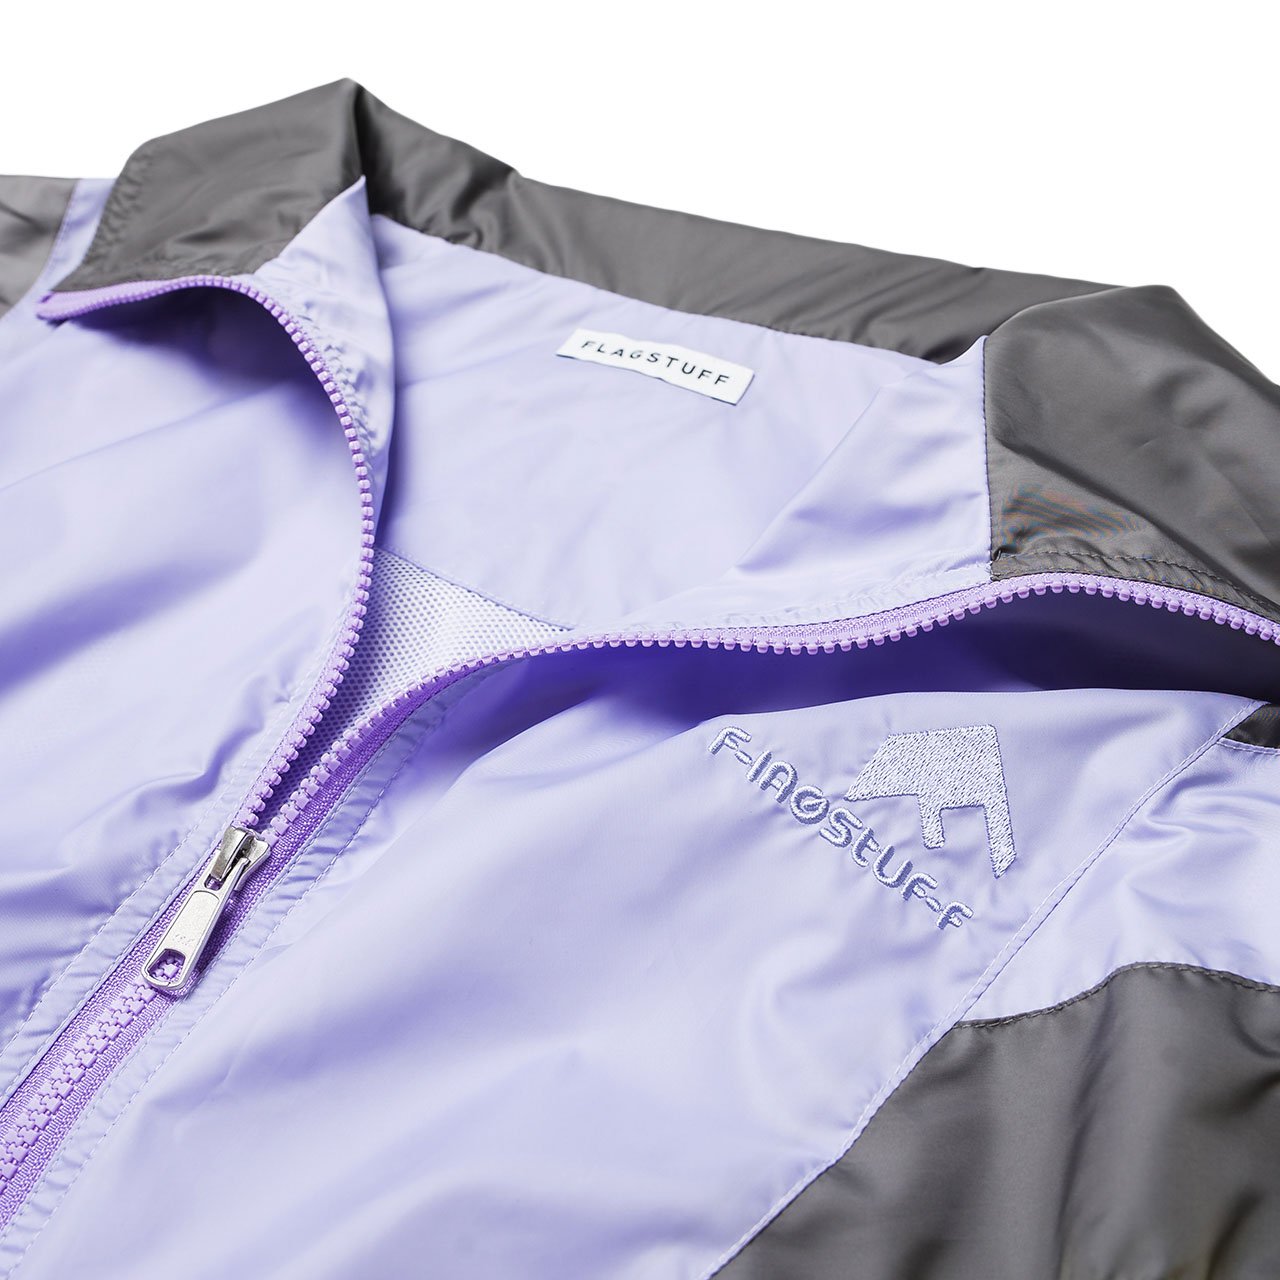 flagstuff warm up jacket (purple) - 19ss-fs-07 - a.plus - Image - 5